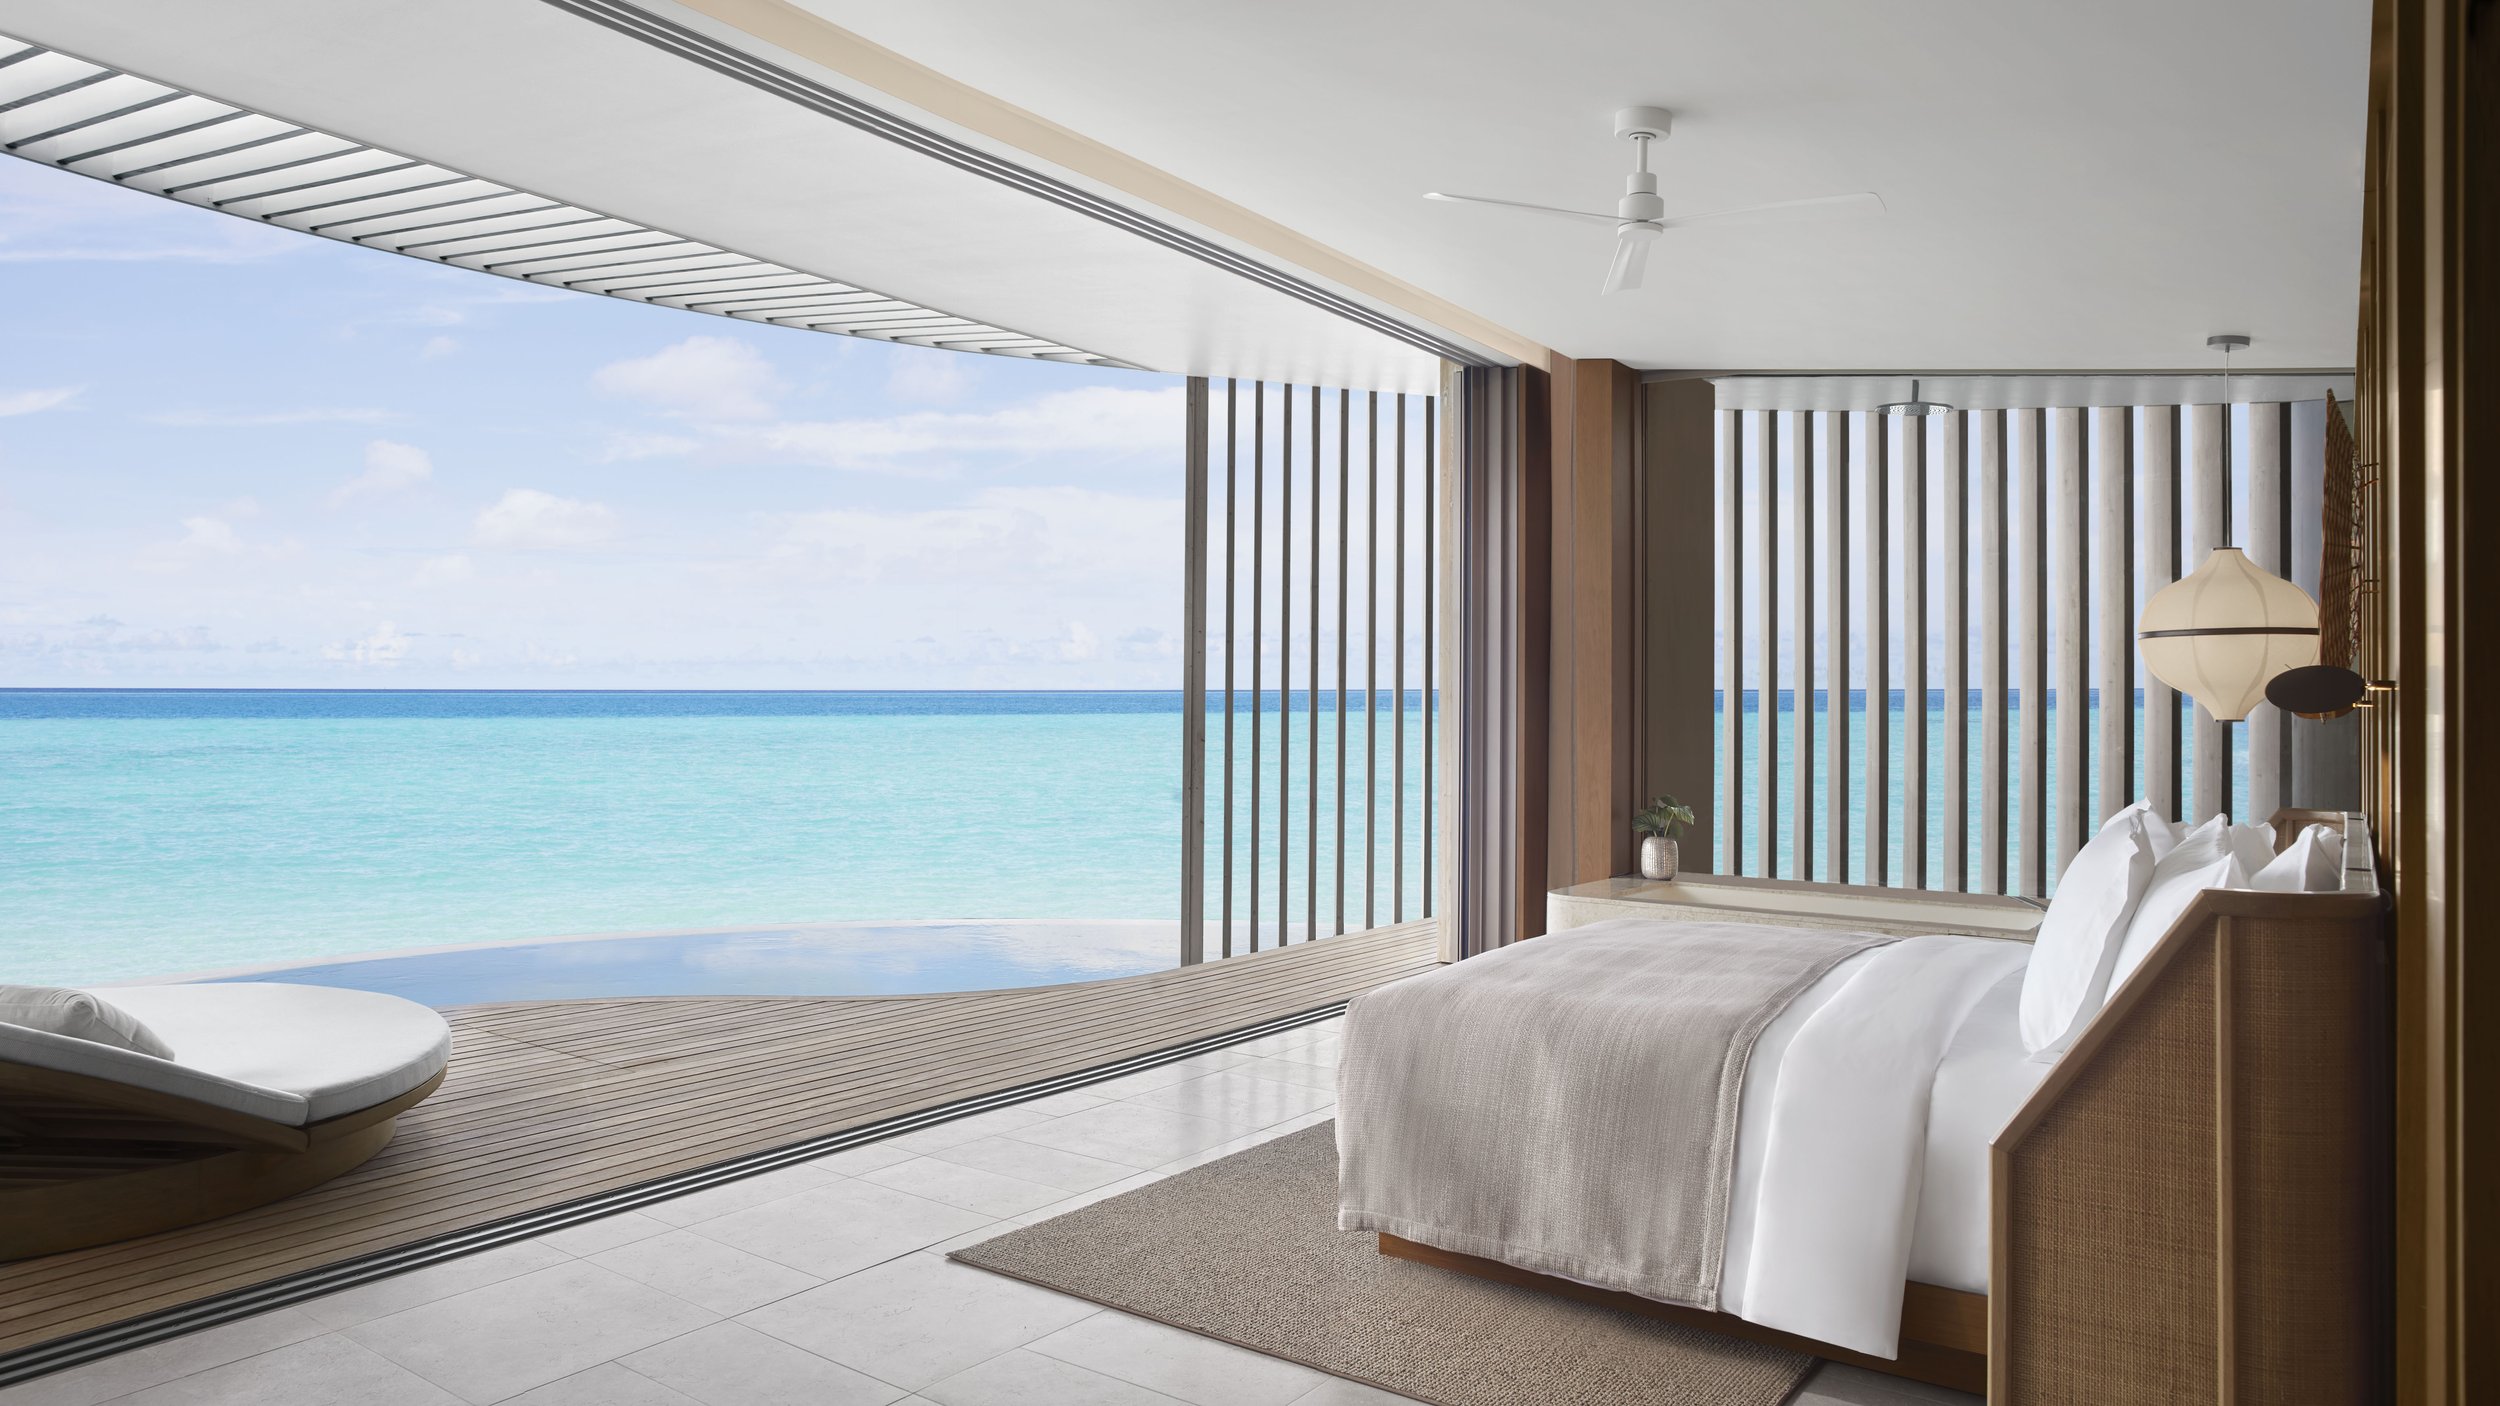 The Ritz-Carlton Maldives, Fari Islands - Ocean Pool Villa - Bedroom 2 (1).jpg